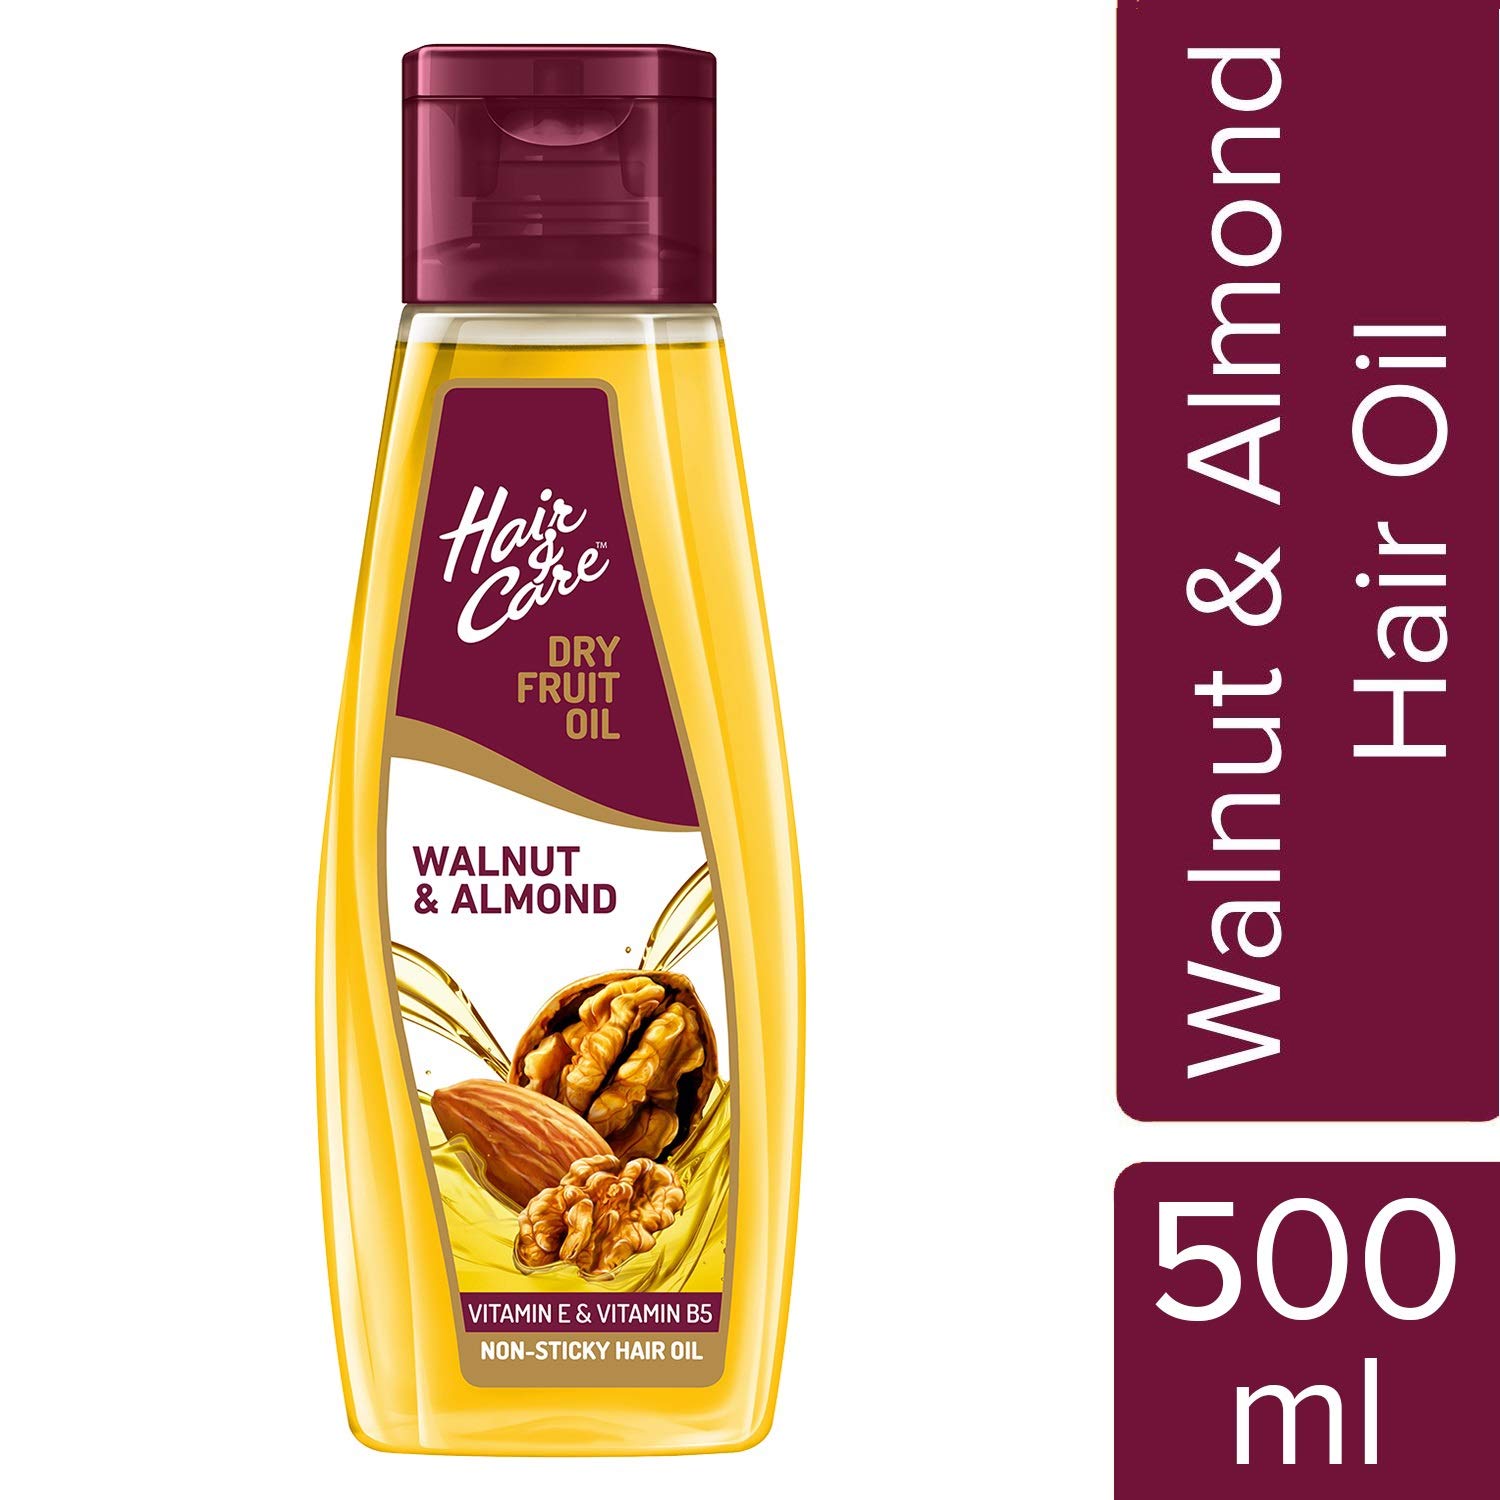 Hair & Care Dry Fruit Oil With Walnut & Almond (Non-Sticky Hair Oil), 500 ml